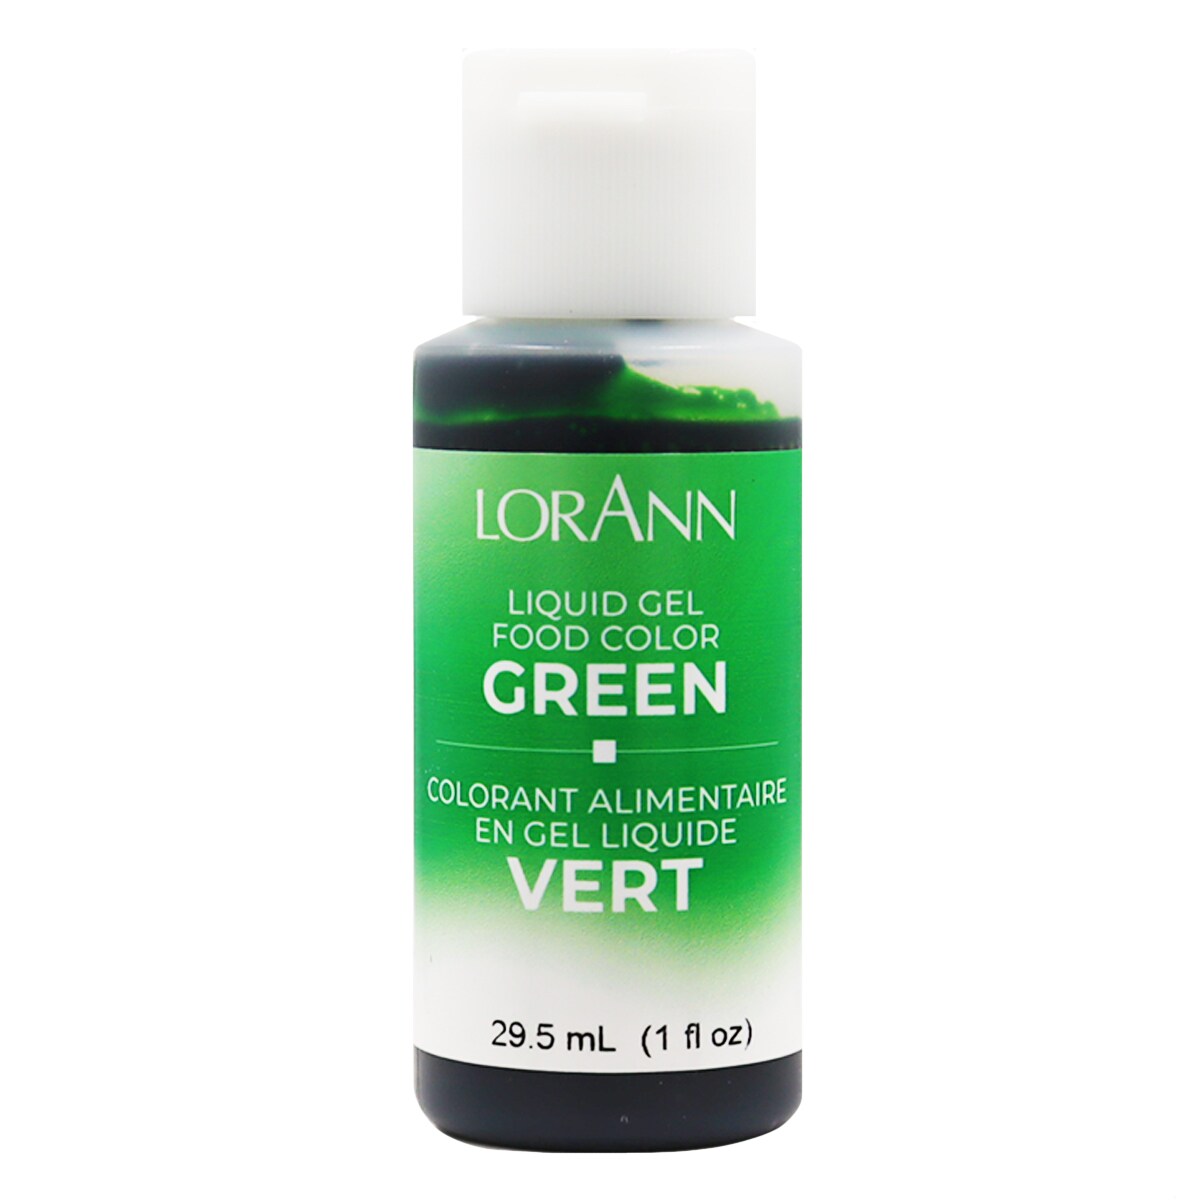 LorAnn Oils Green Liquid Gel Food Color, 1 ounce